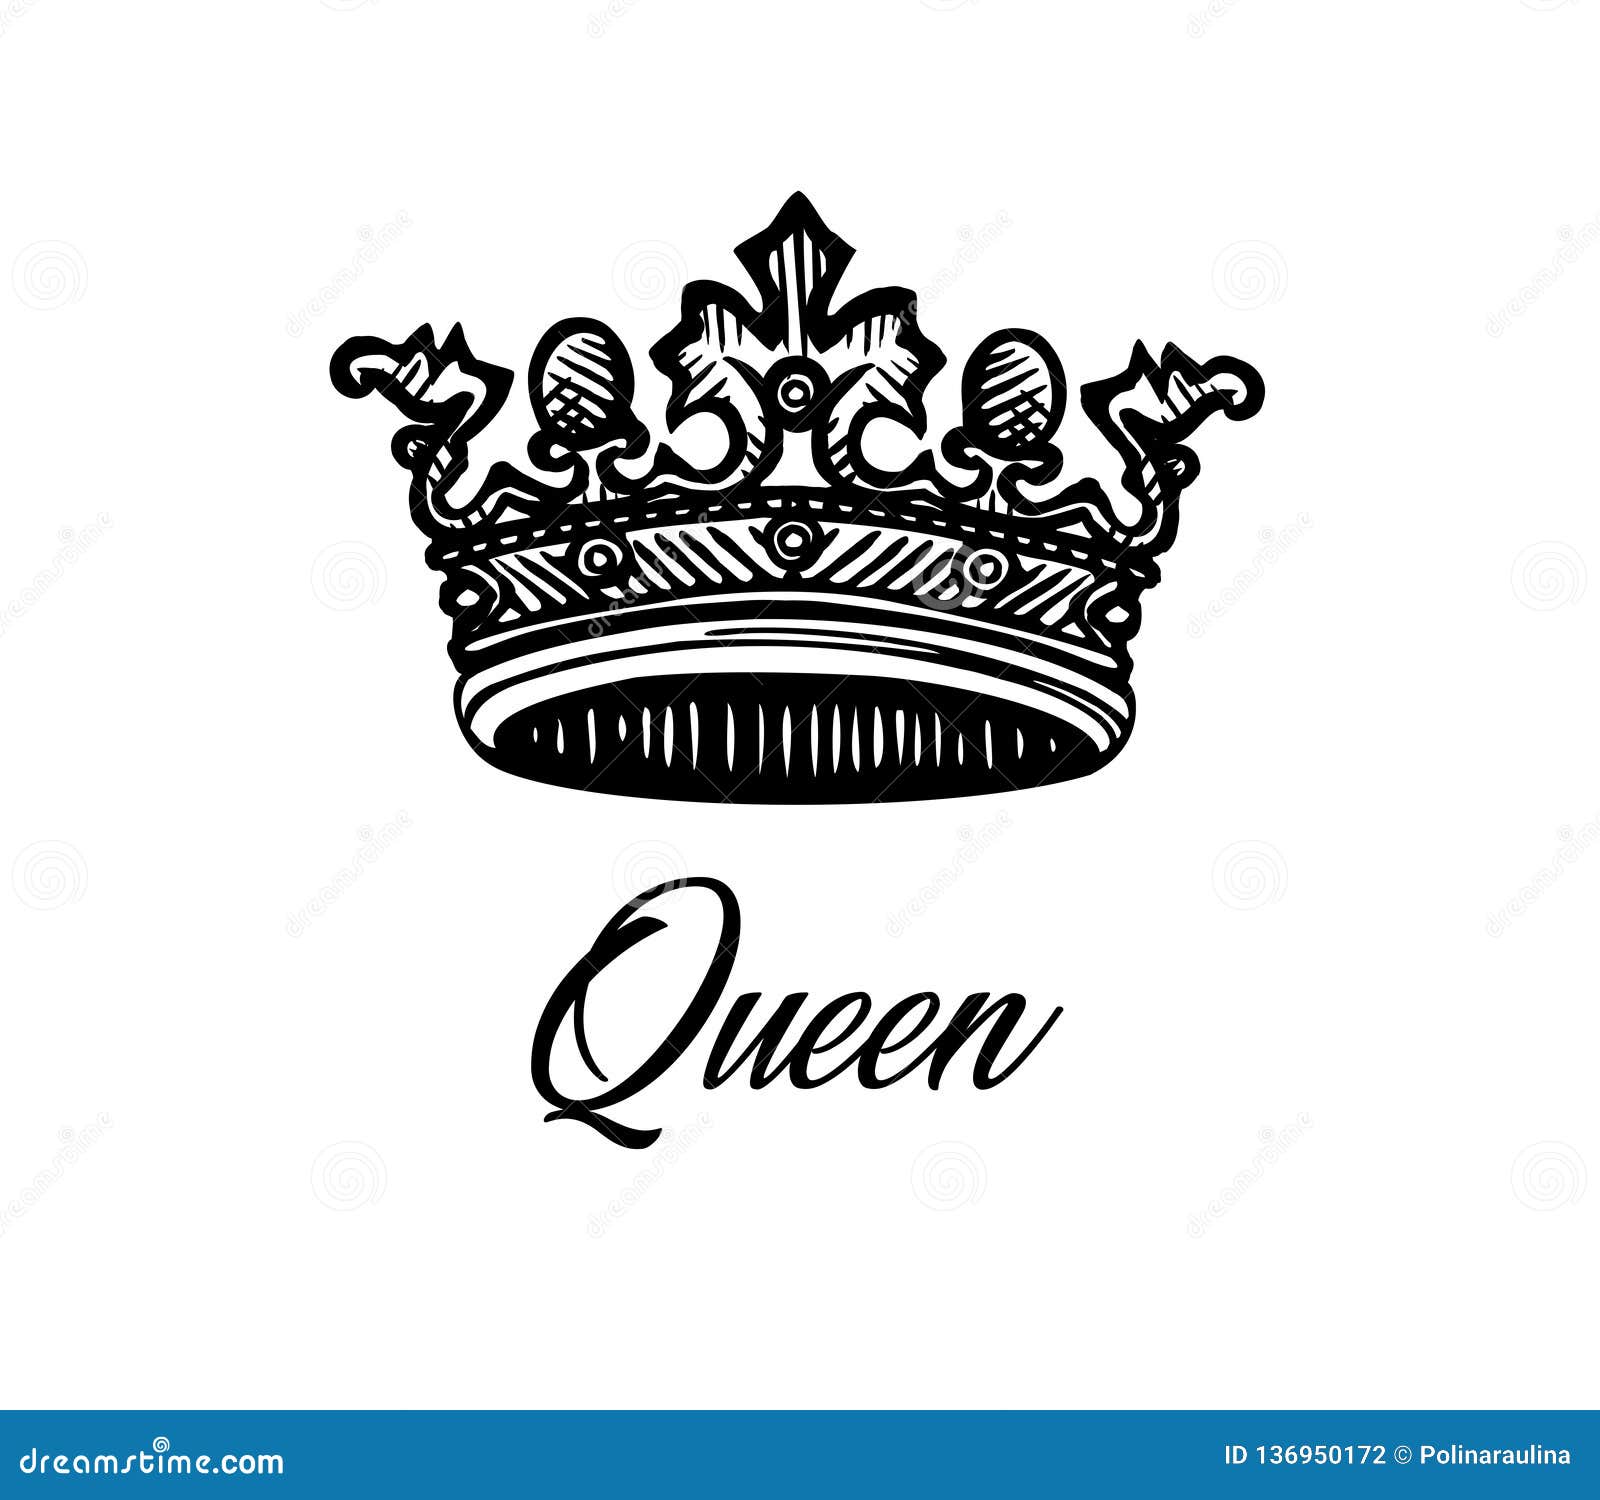 Queen Crown Tattoo - Etsy